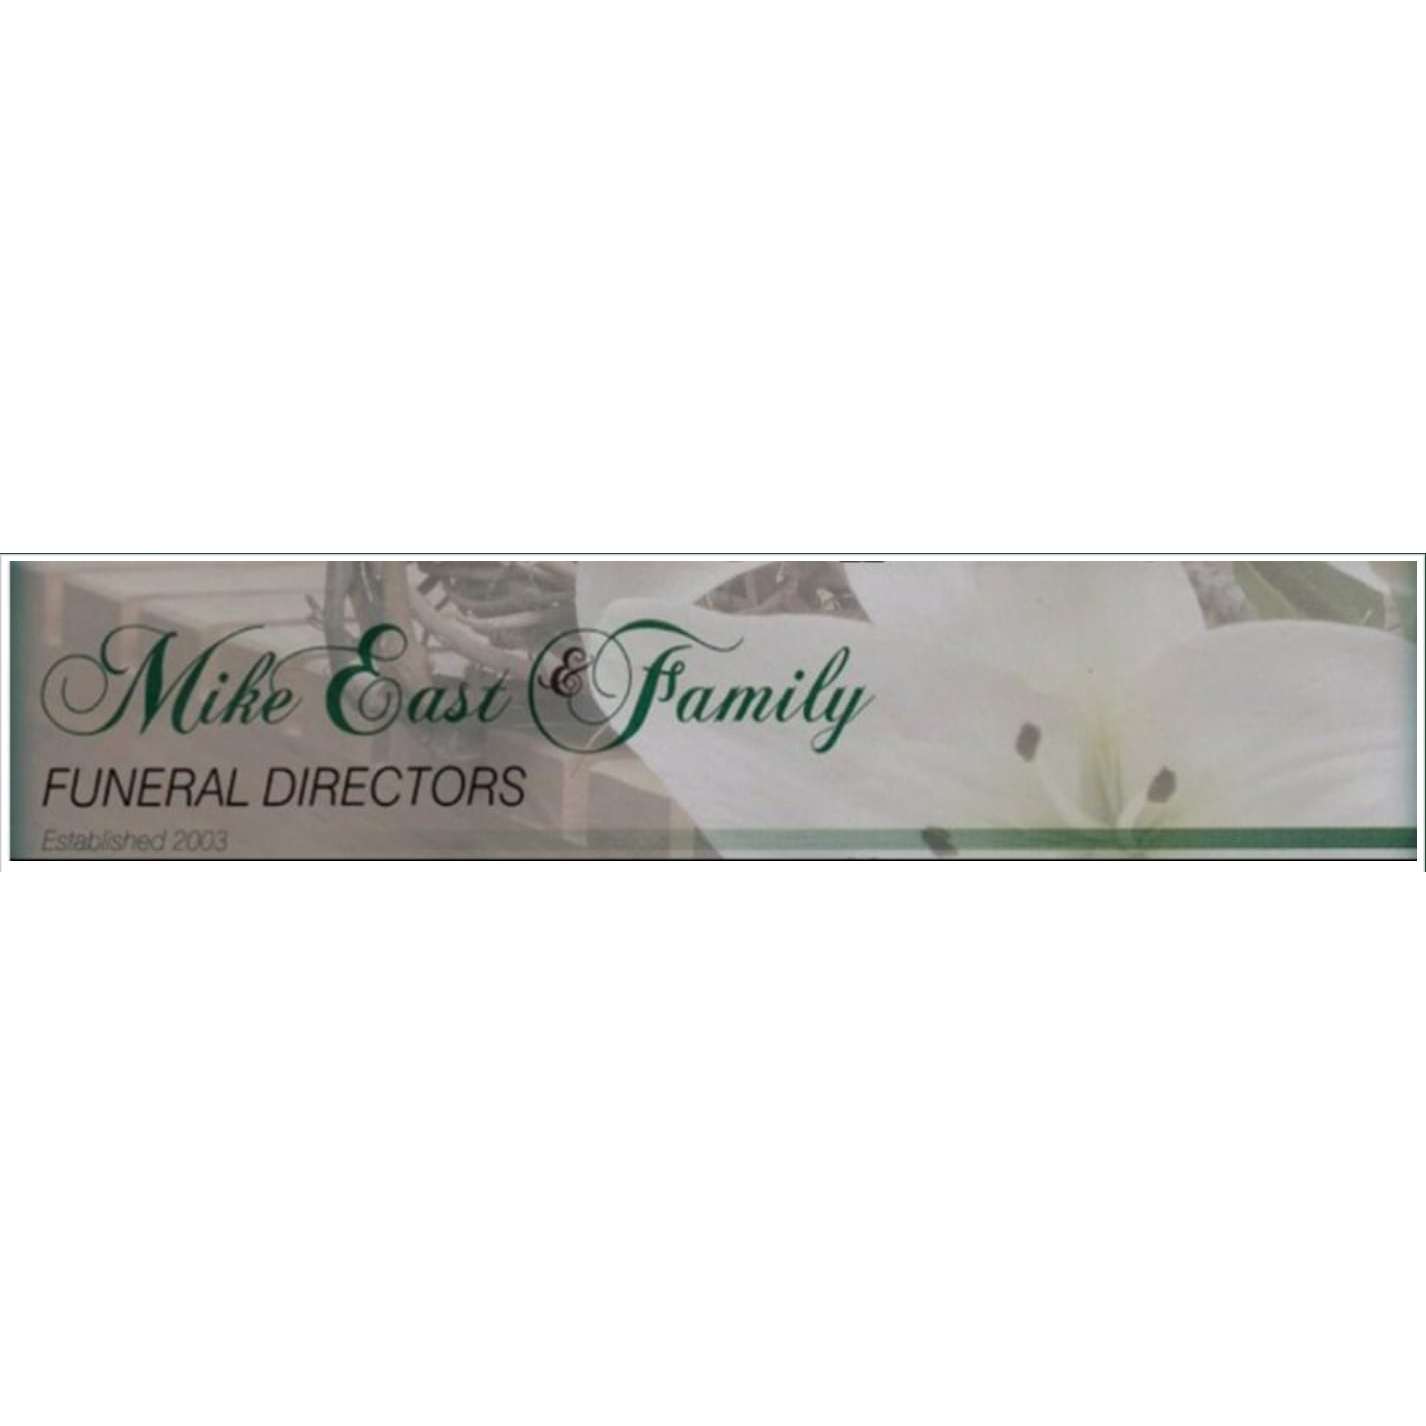 LOGO Mike East & Family Funeral Directors Hull 01482 375214